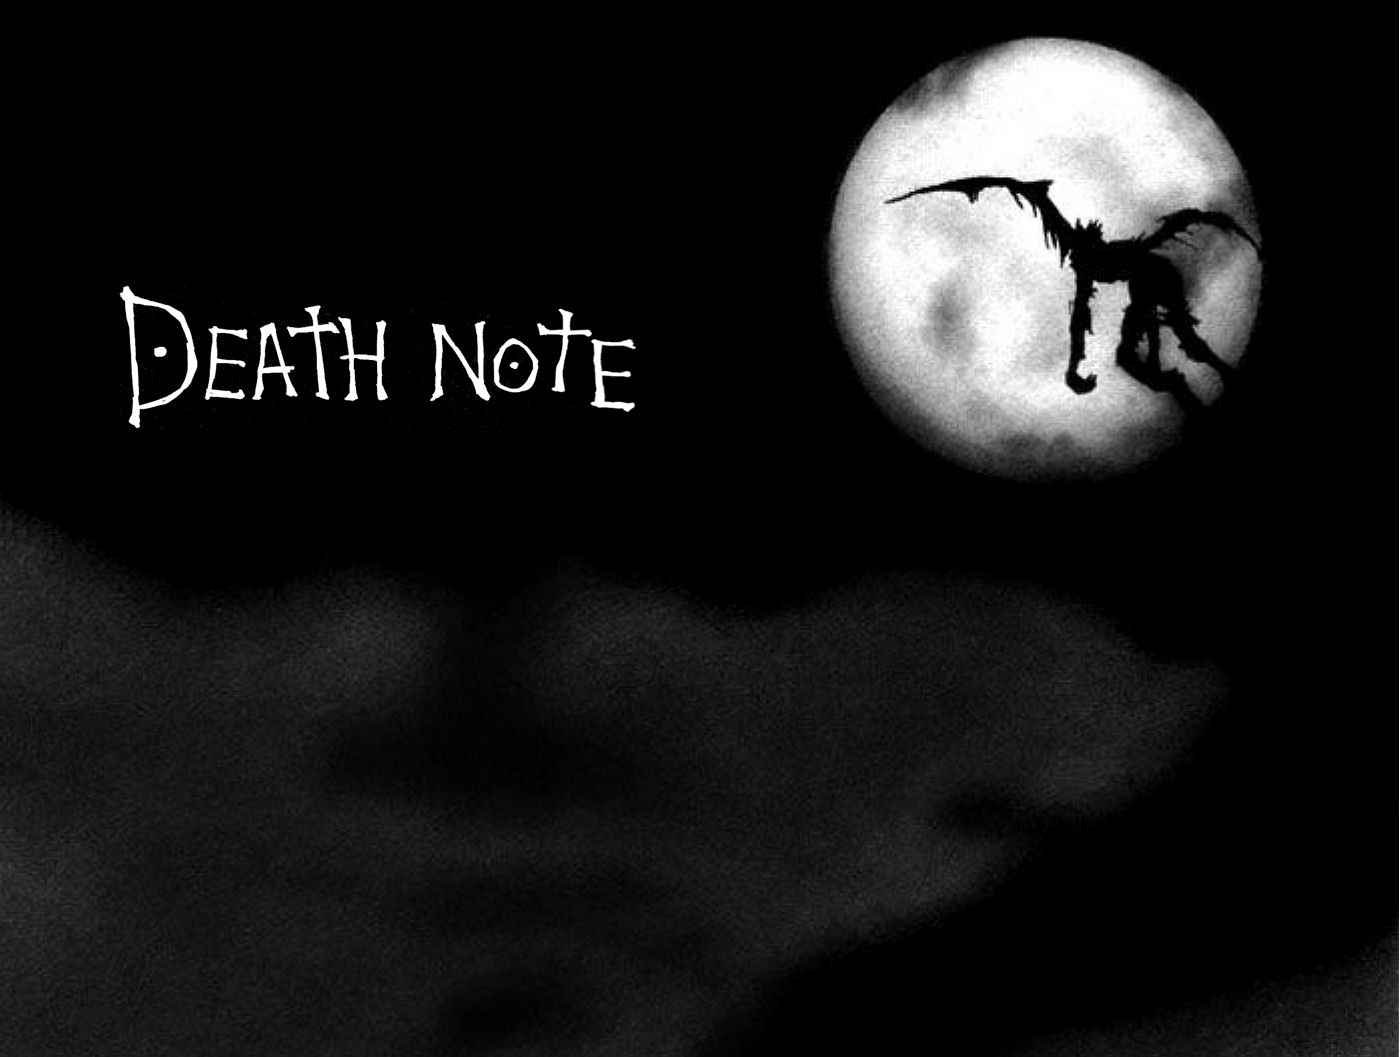 Death Note 壁紙画像 Pchdwallpaper Com Pchdwallpaper Com